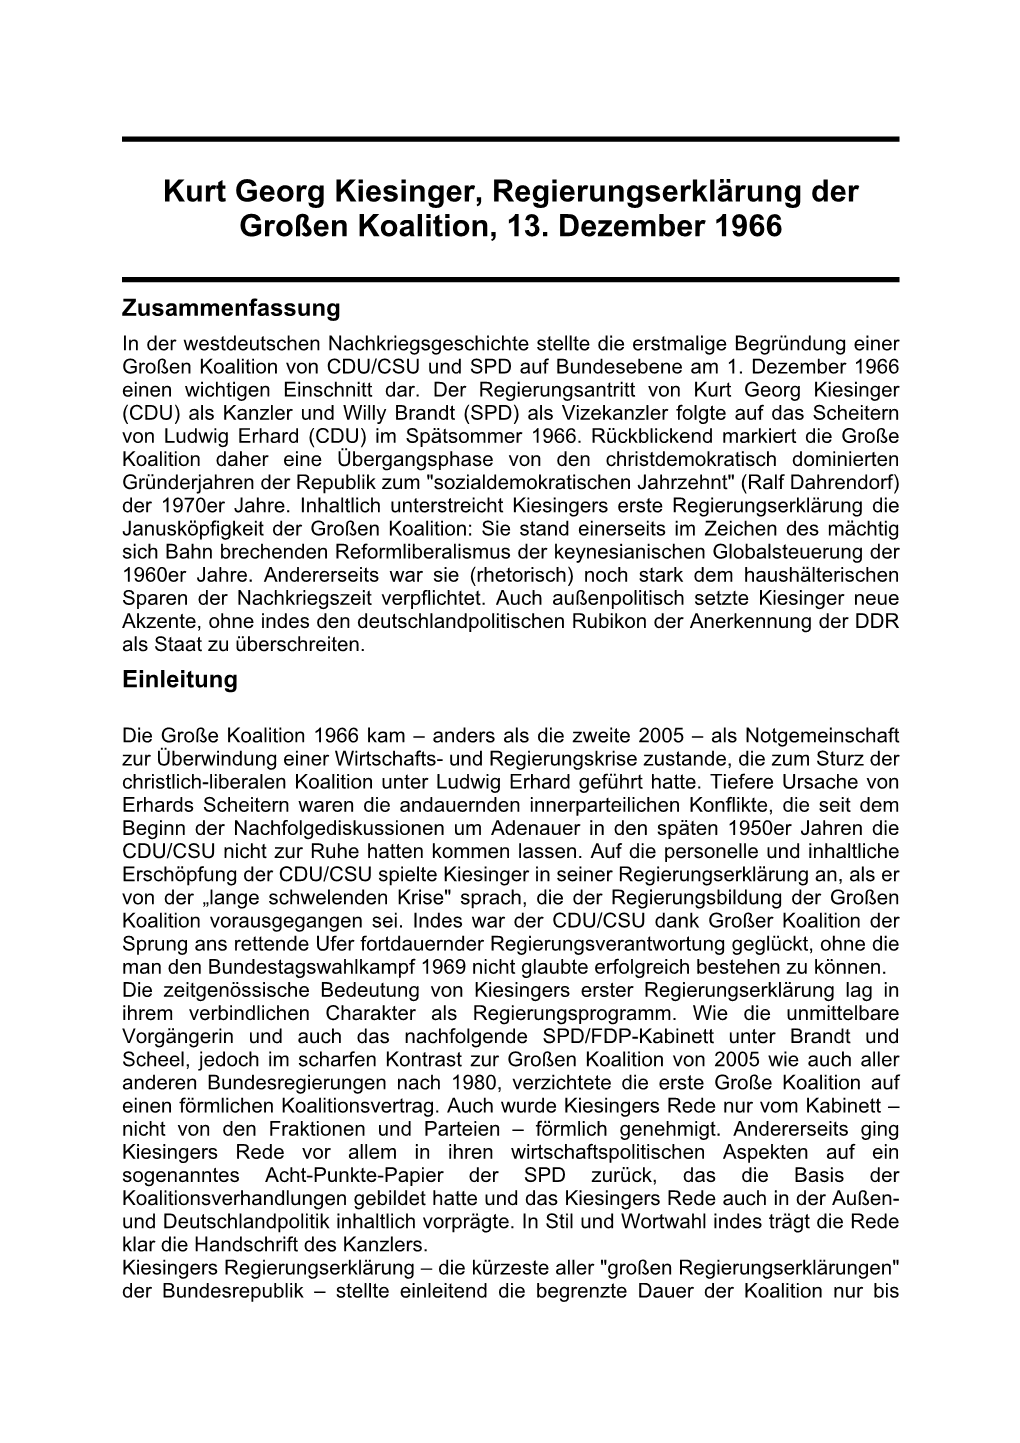 Kurt Georg Kiesinger, Regierungserklärung Der Großen Koalition, 13